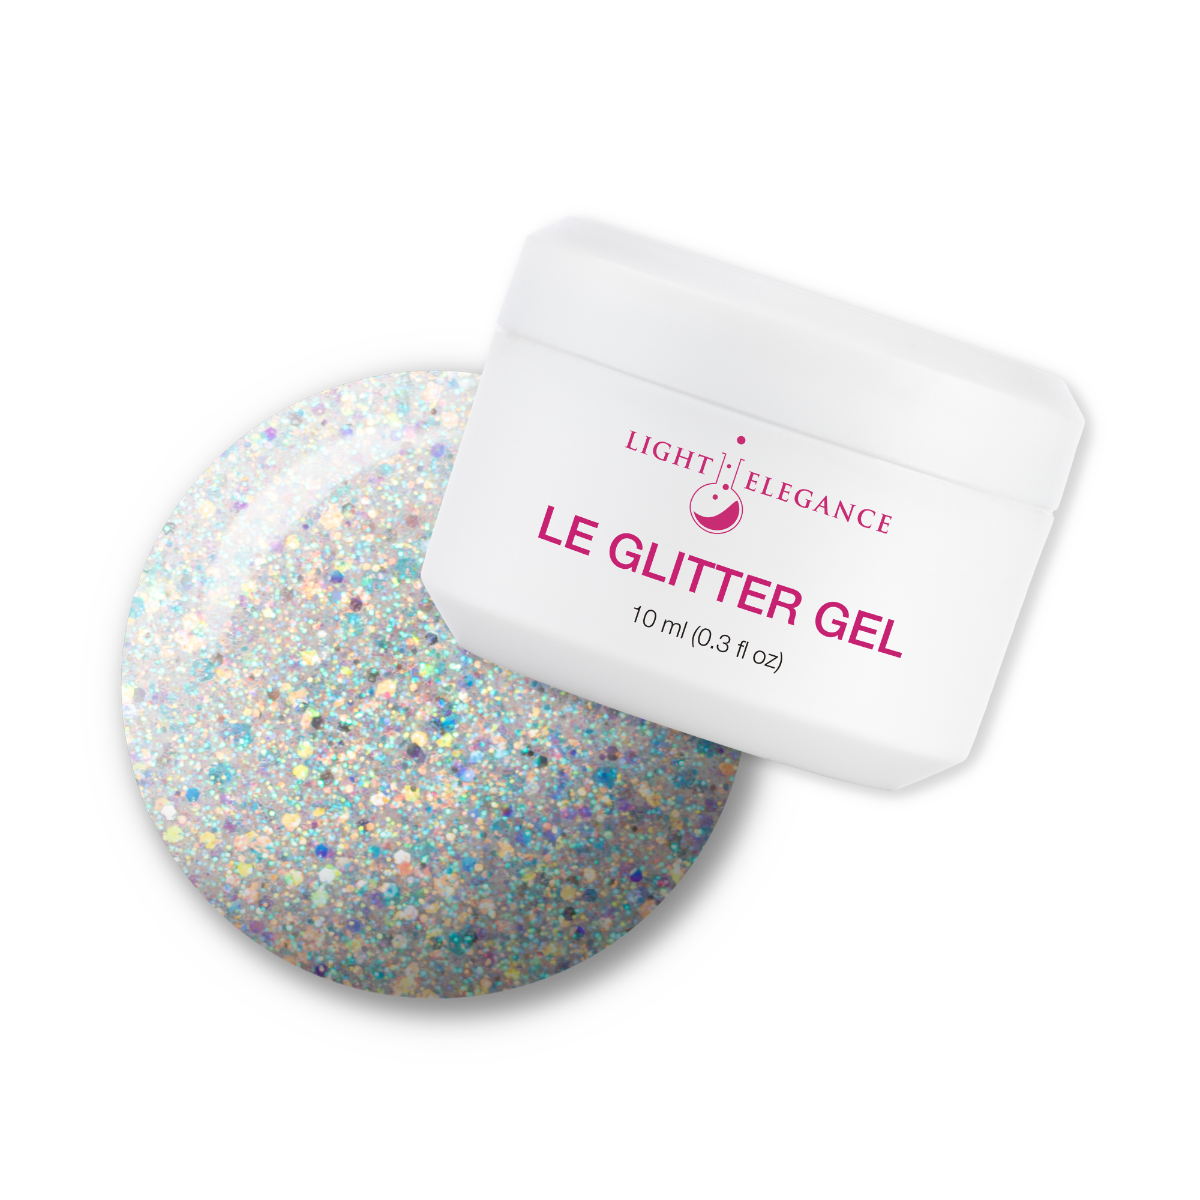 Light Elegance Glitter Gel - Ice Cream, You Scream :: New Packaging - Creata Beauty - Professional Beauty Products